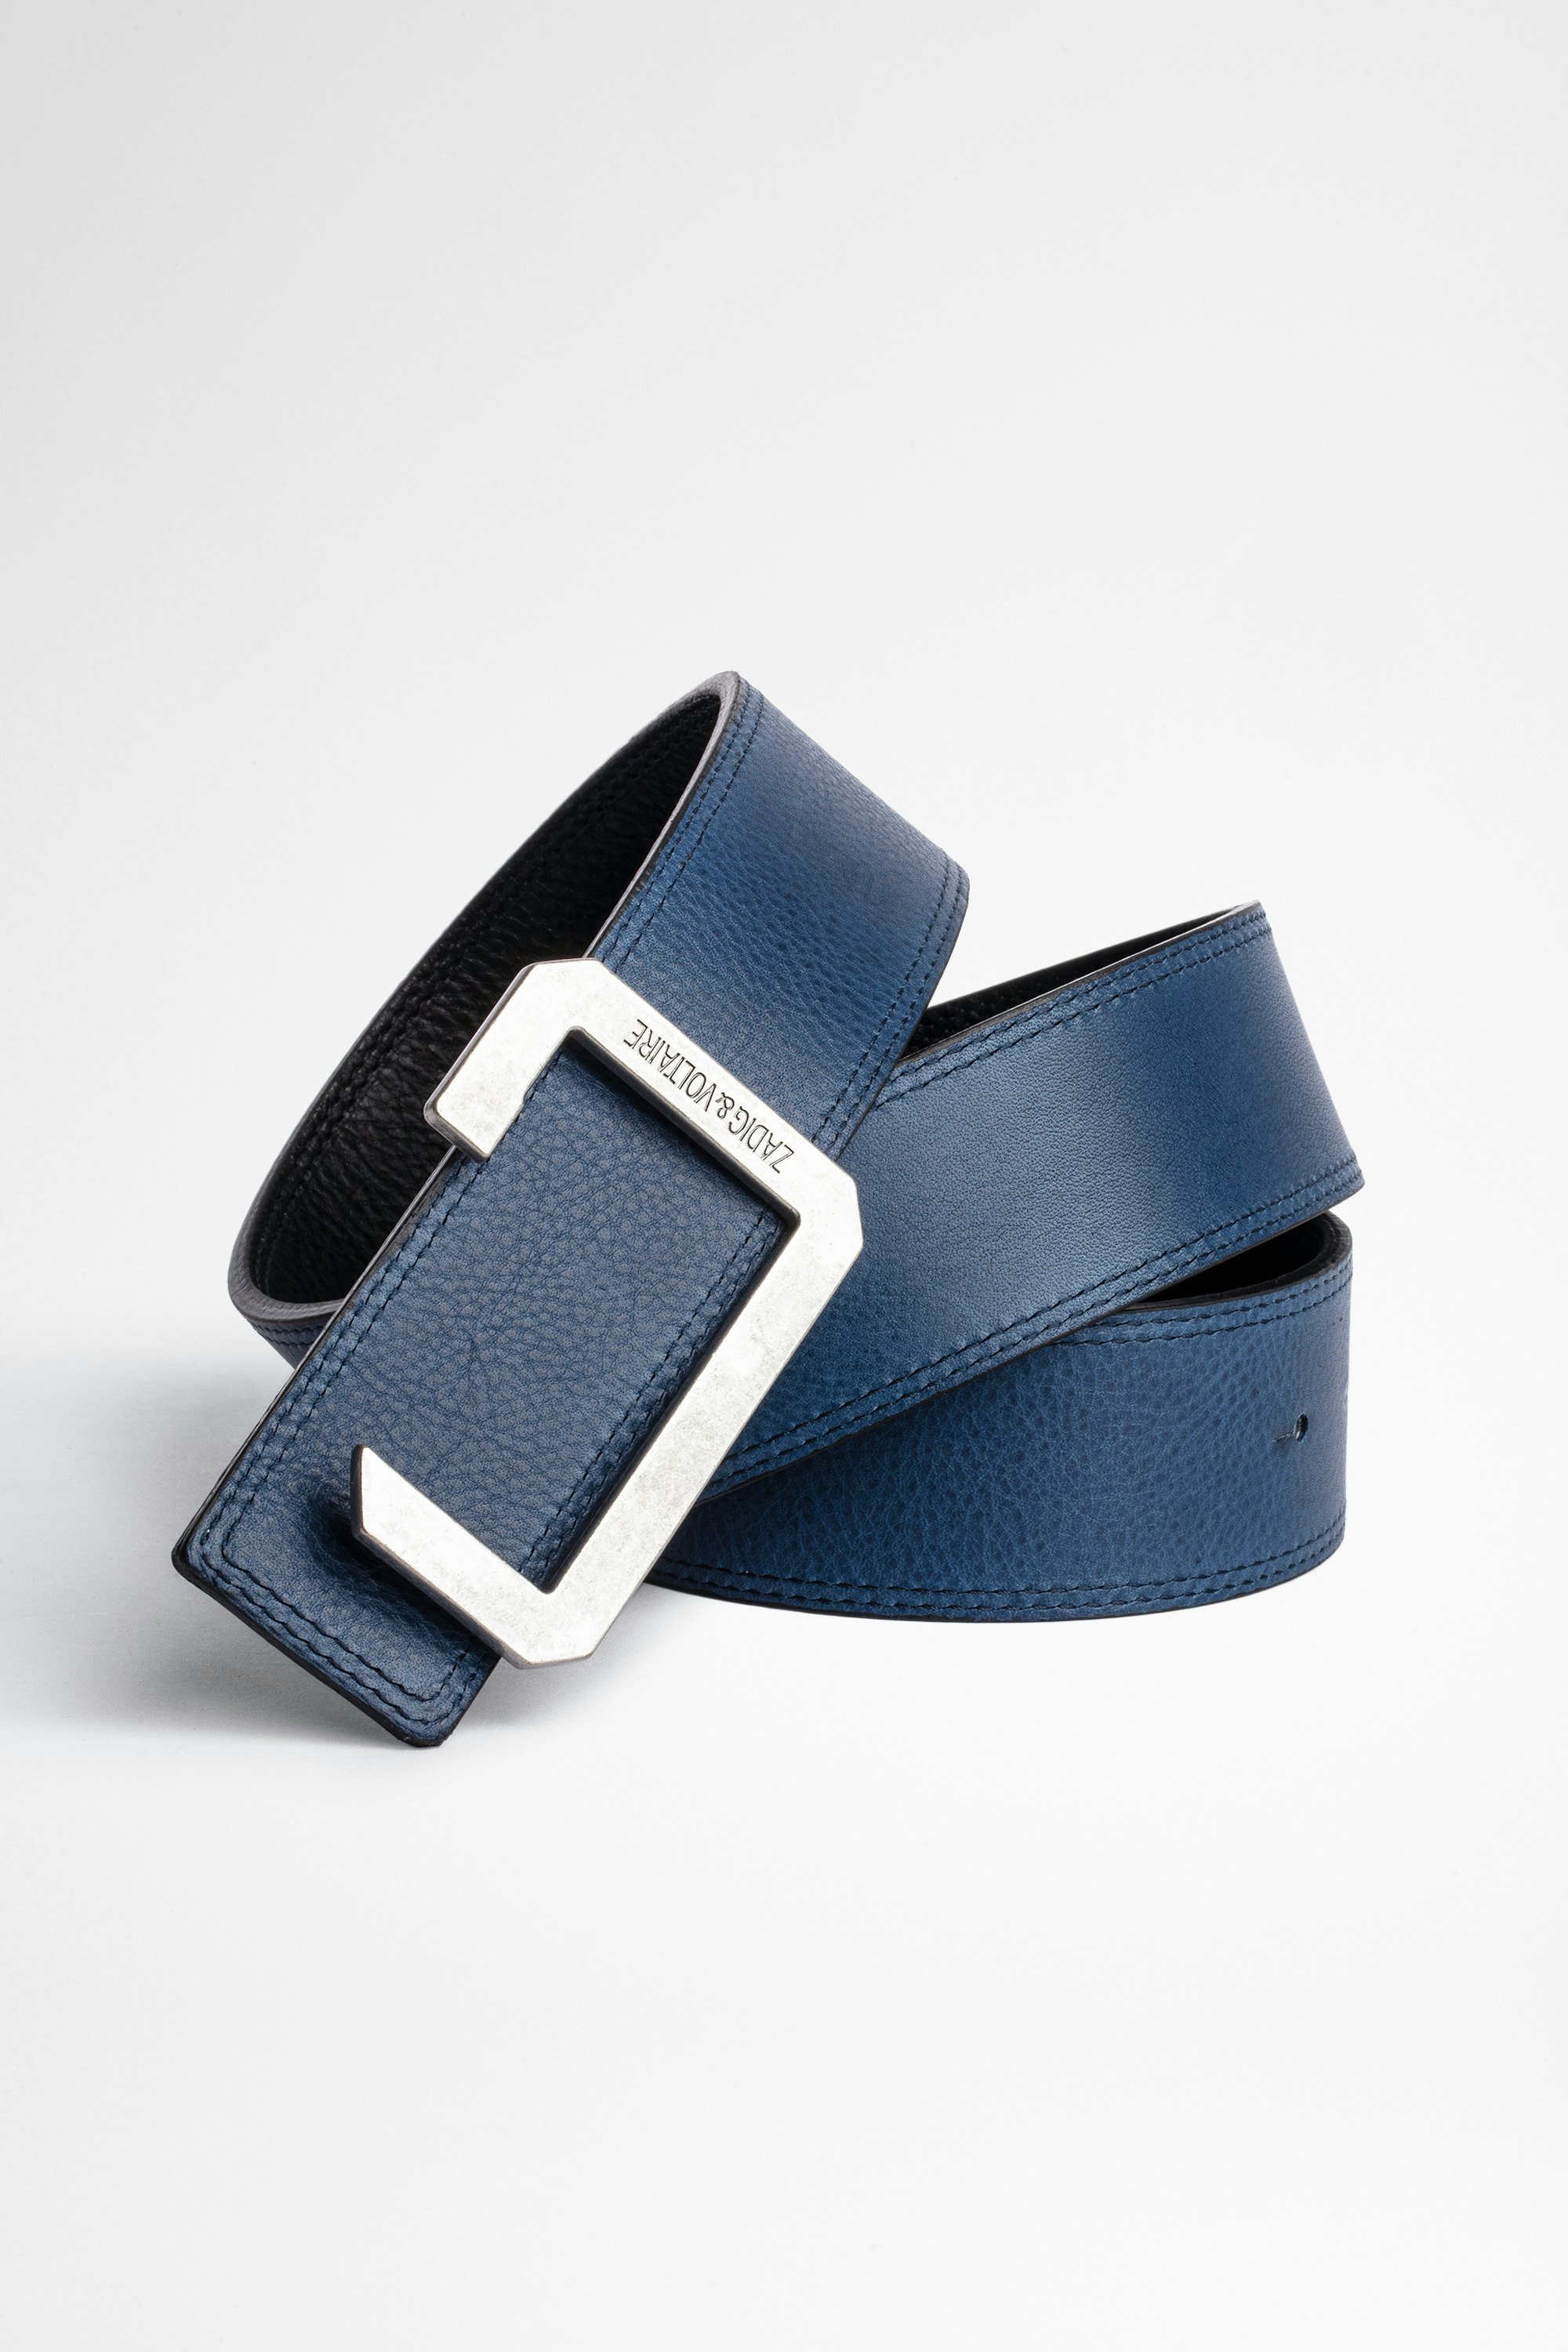 The Reversible Belt Leather Men's reversible leather belt